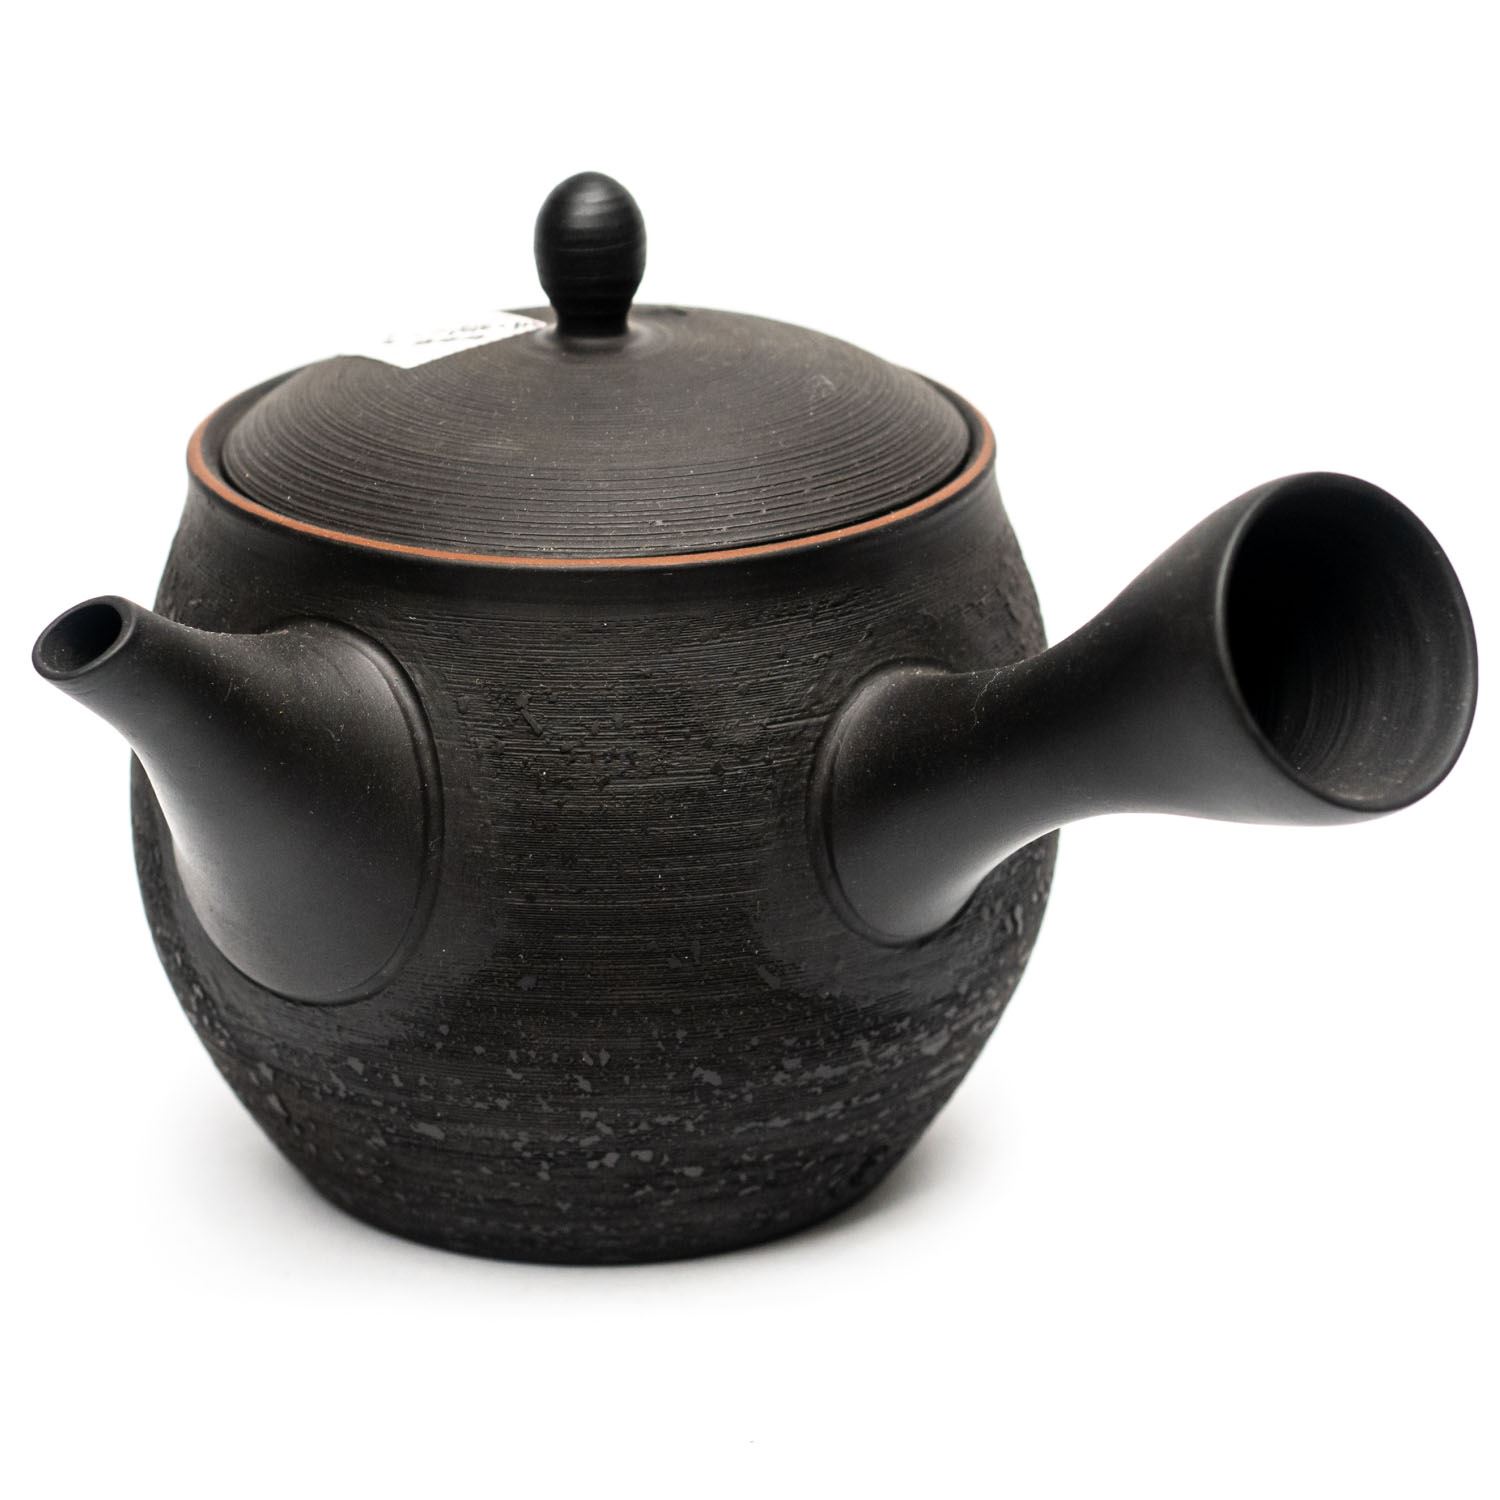 One-handed Teapot "Japan Kyusu Tokoname Gyokko" (280ml)